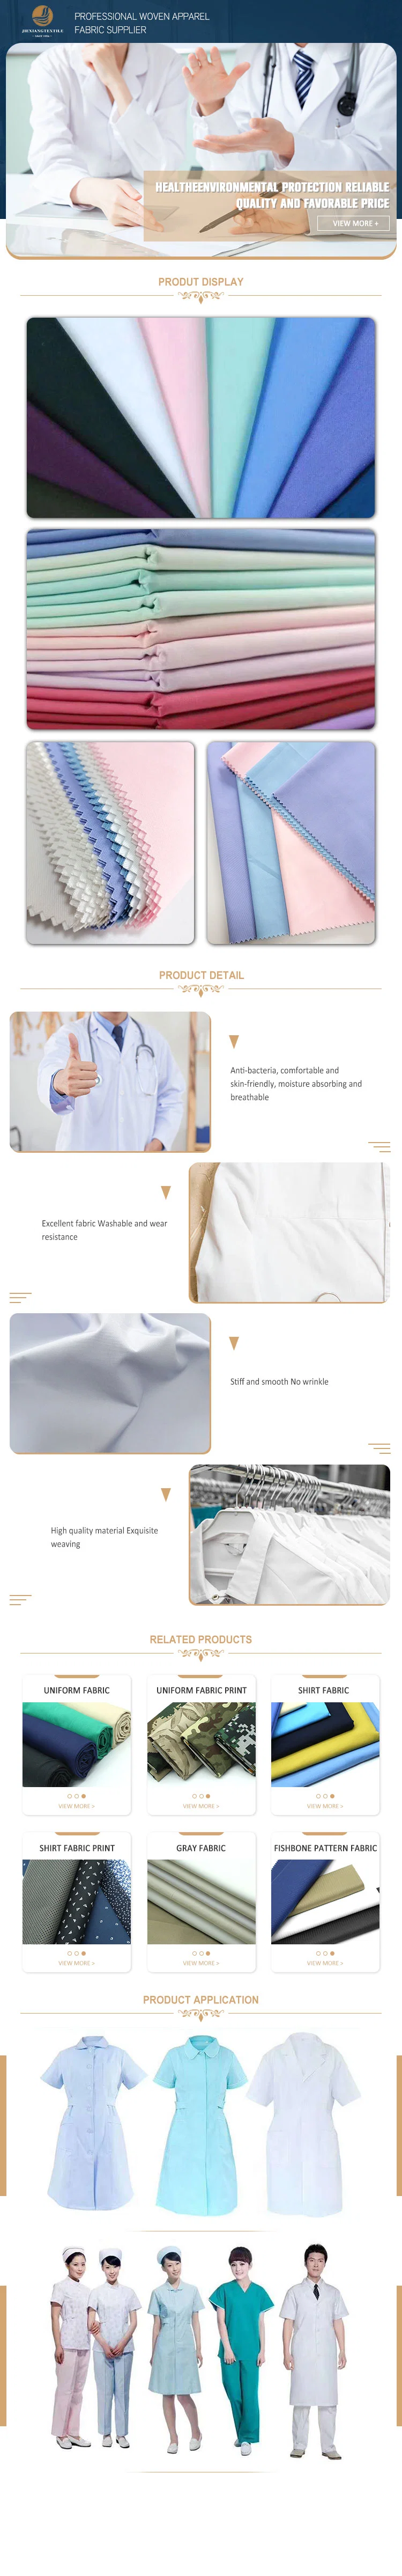 Hot Sell Vat Dyed Polyester Cotton Twill Hospital Medical Nurse Uniform Scrubs Fabric